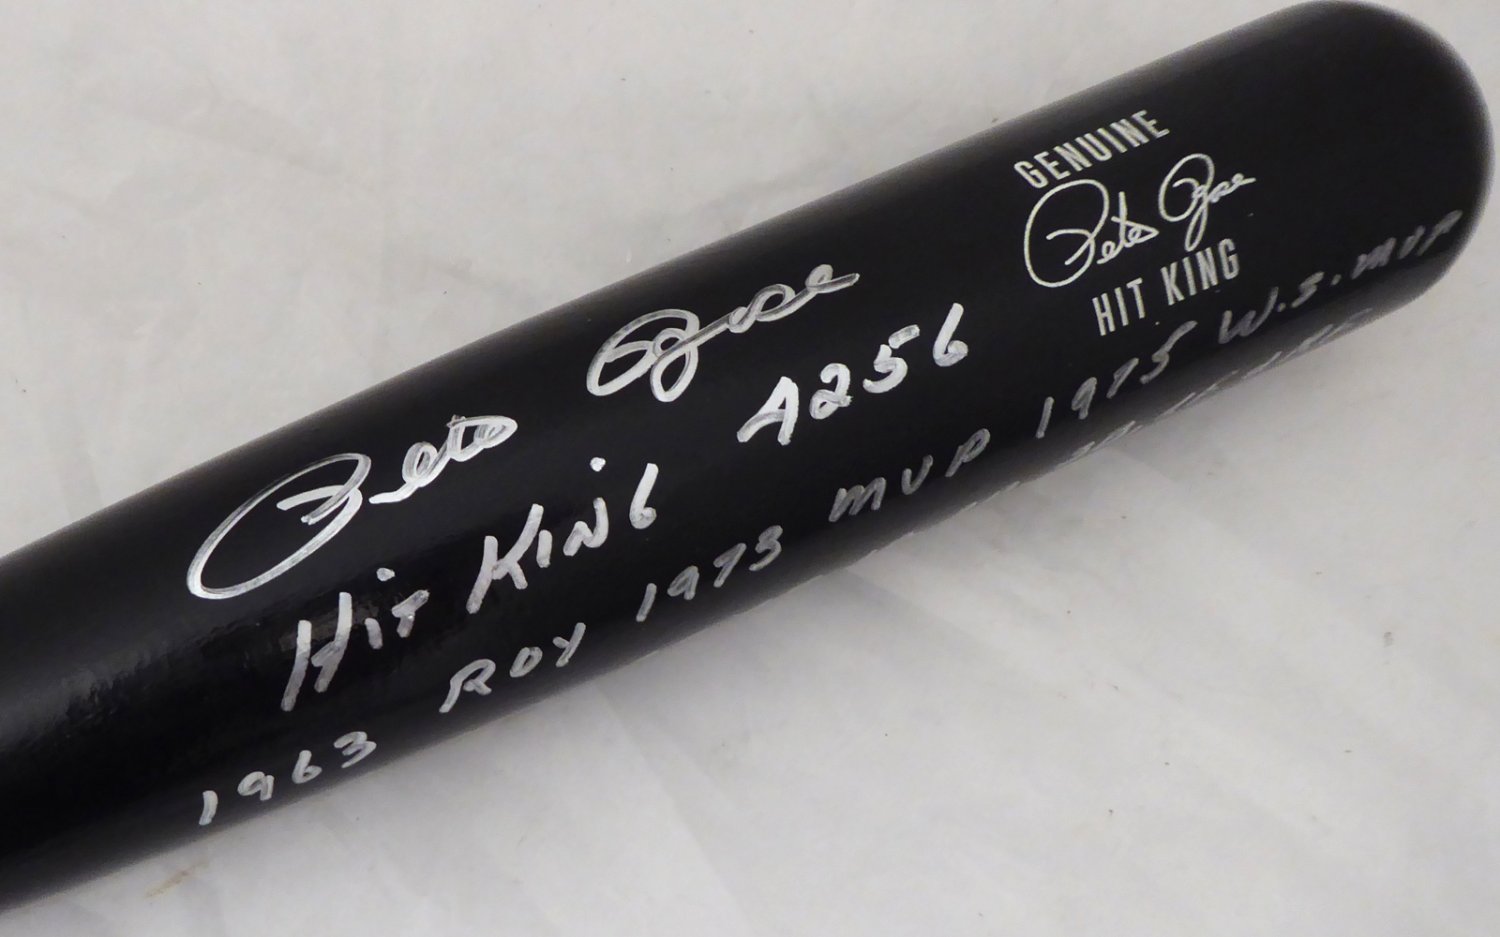 Pete Rose Autographed Signed Black Genuine Bat Cincinnati Reds Stat Bat Hit King 4256 In Silver Pr Holo P5326705 